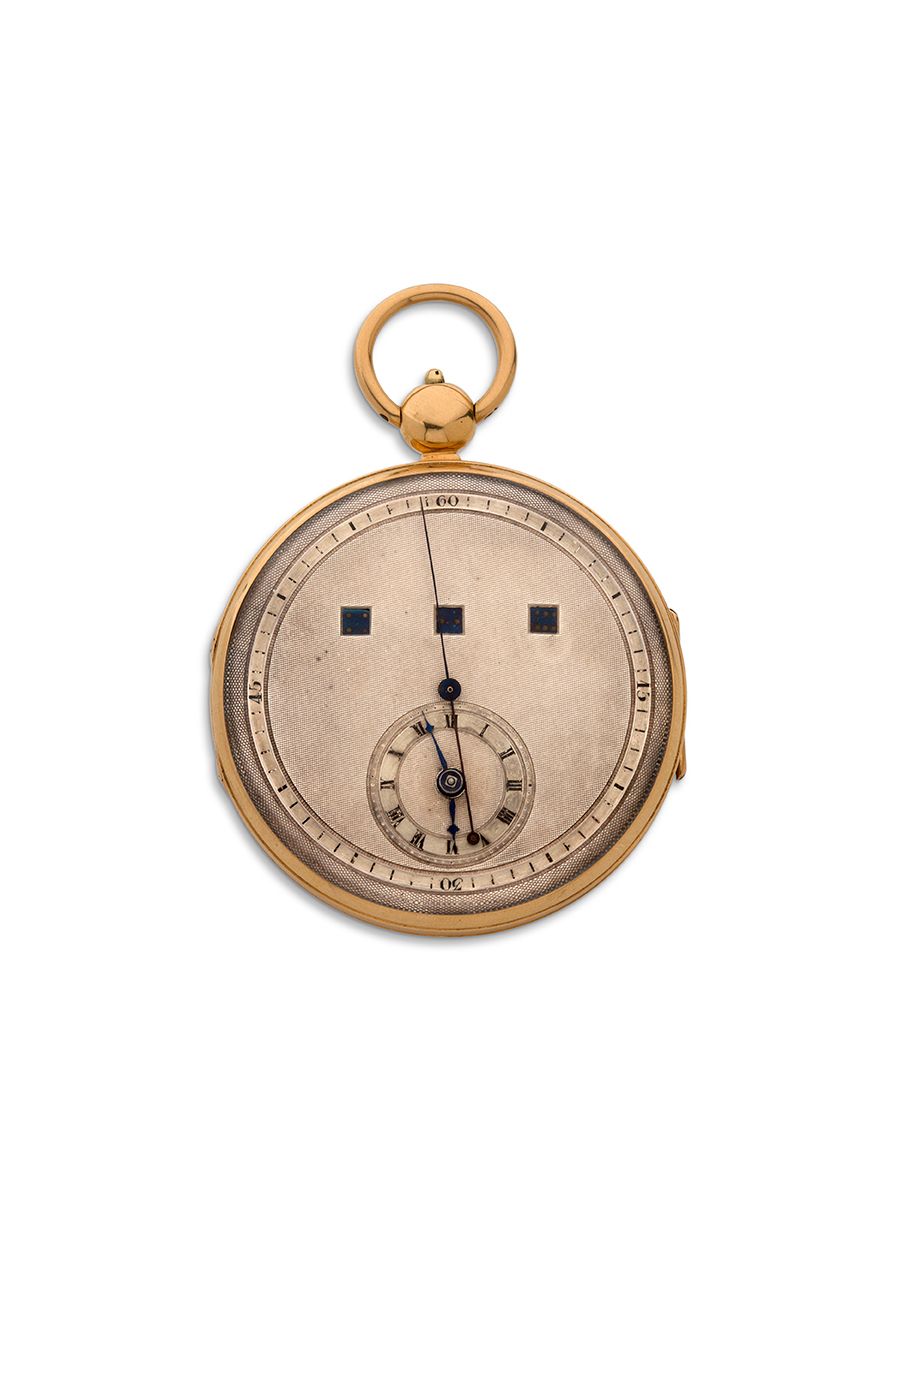 ANONYME 
Reloj de bolsillo de oro con esfera reguladora, segundero central y abe&hellip;